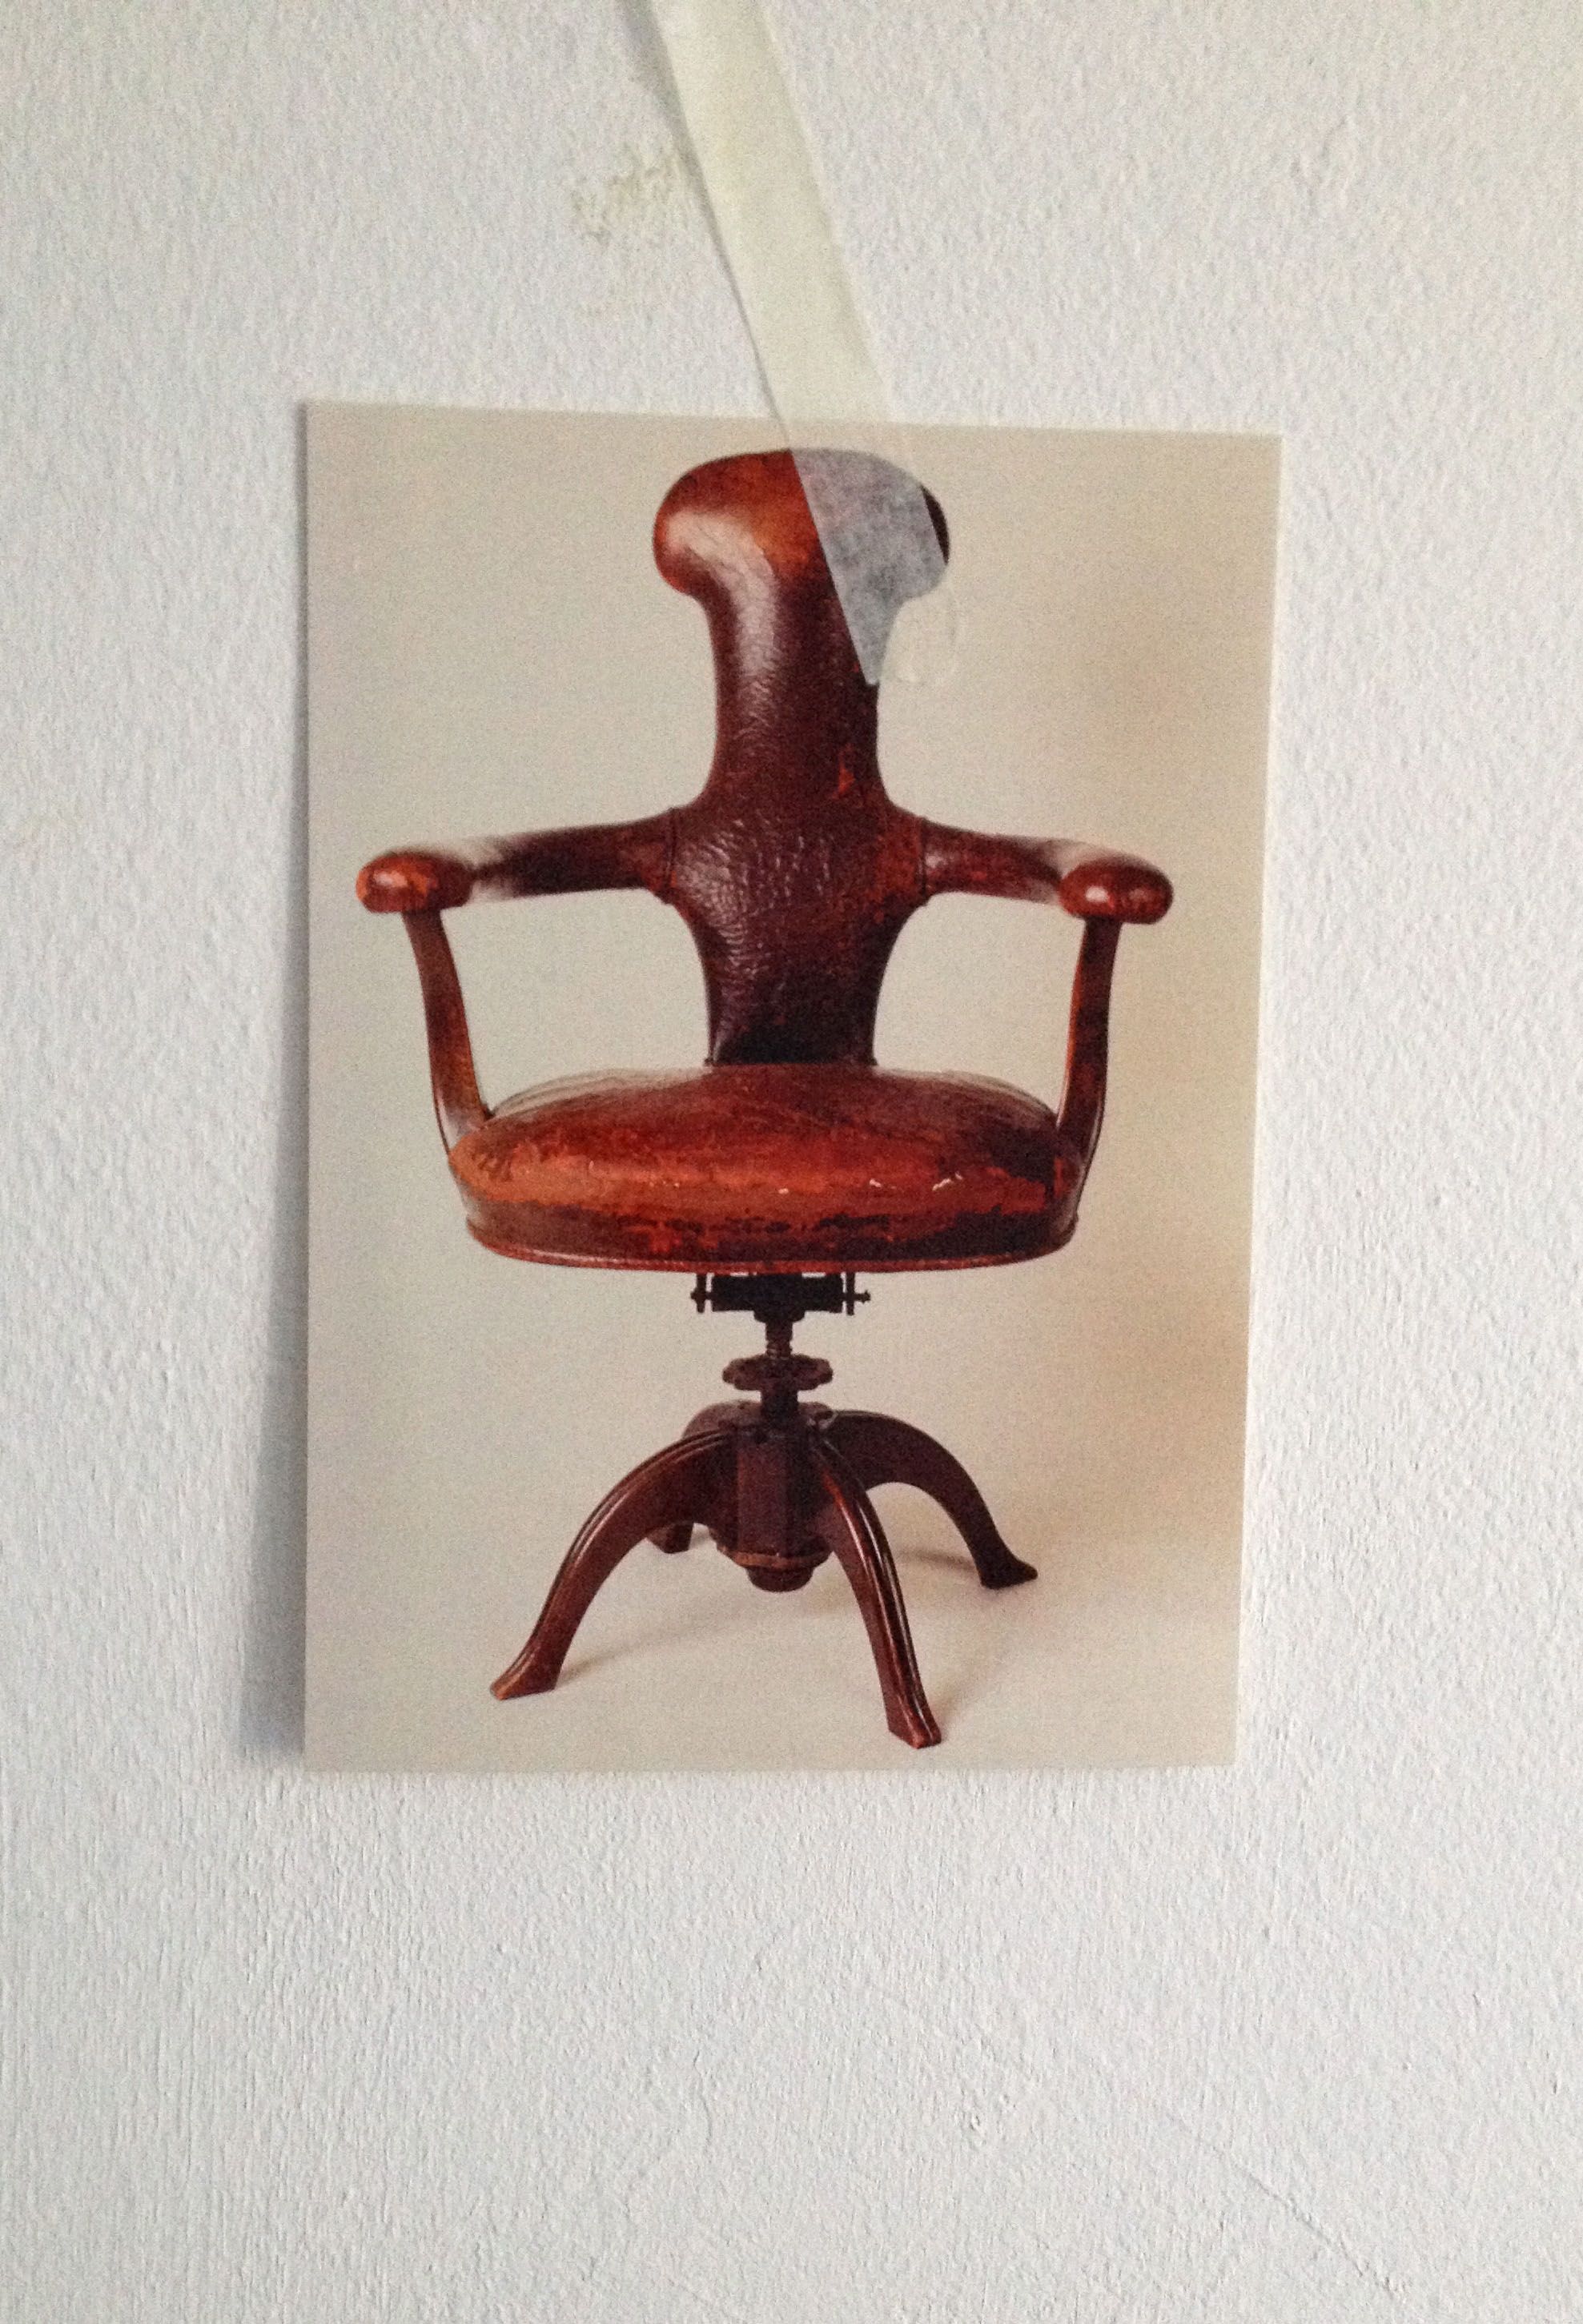 Freud's chair